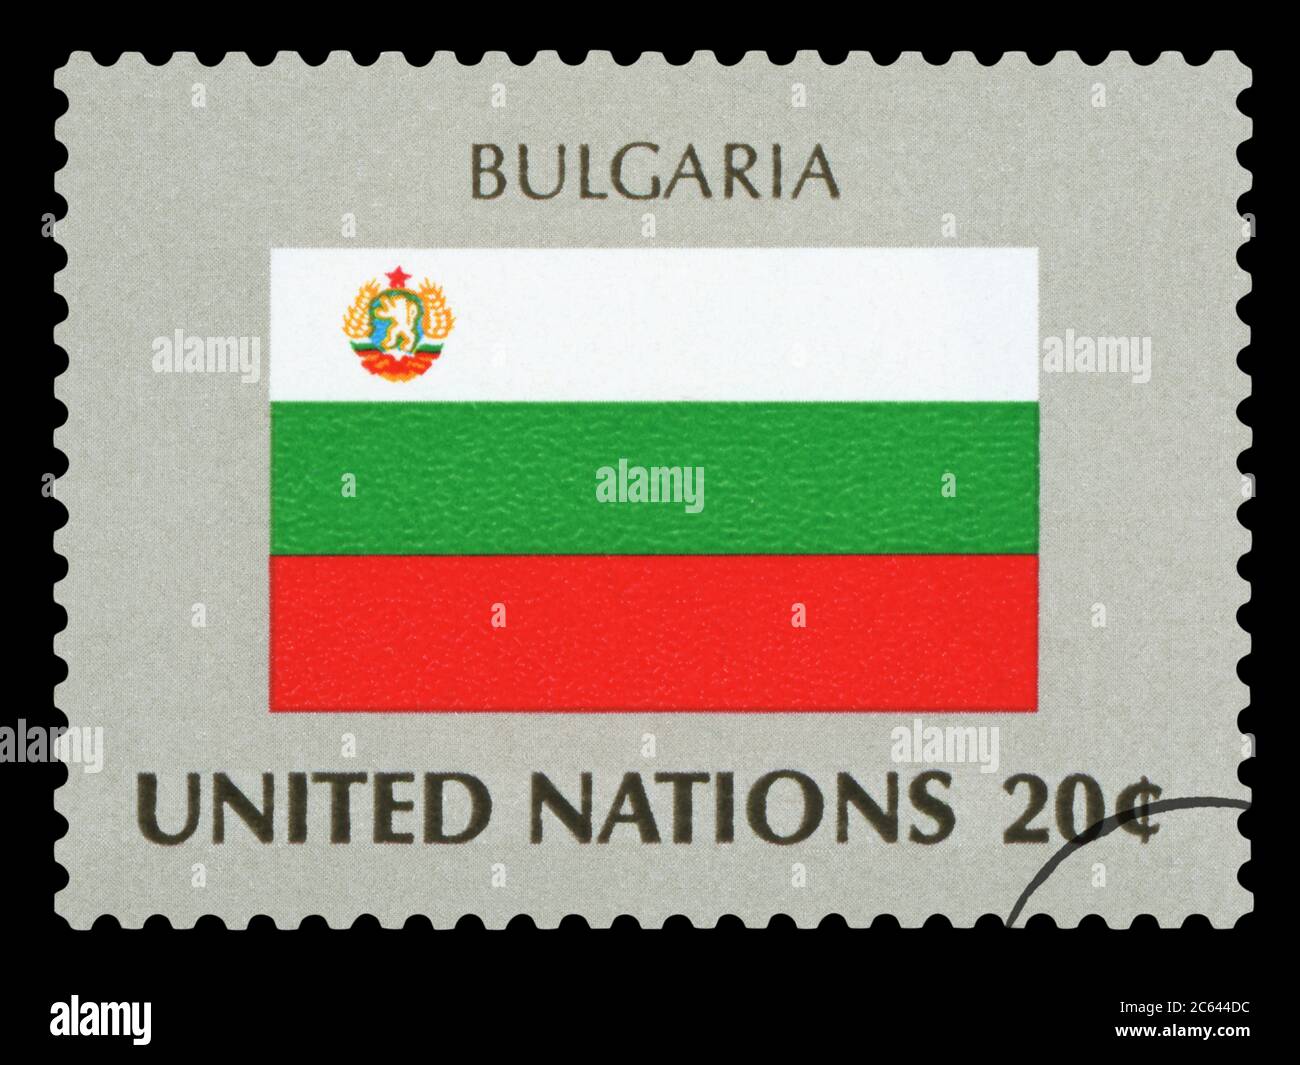 BULGARIA - Postage Stamp of Bulgaria national flag, Series of United Nations, circa 1984. Stock Photo